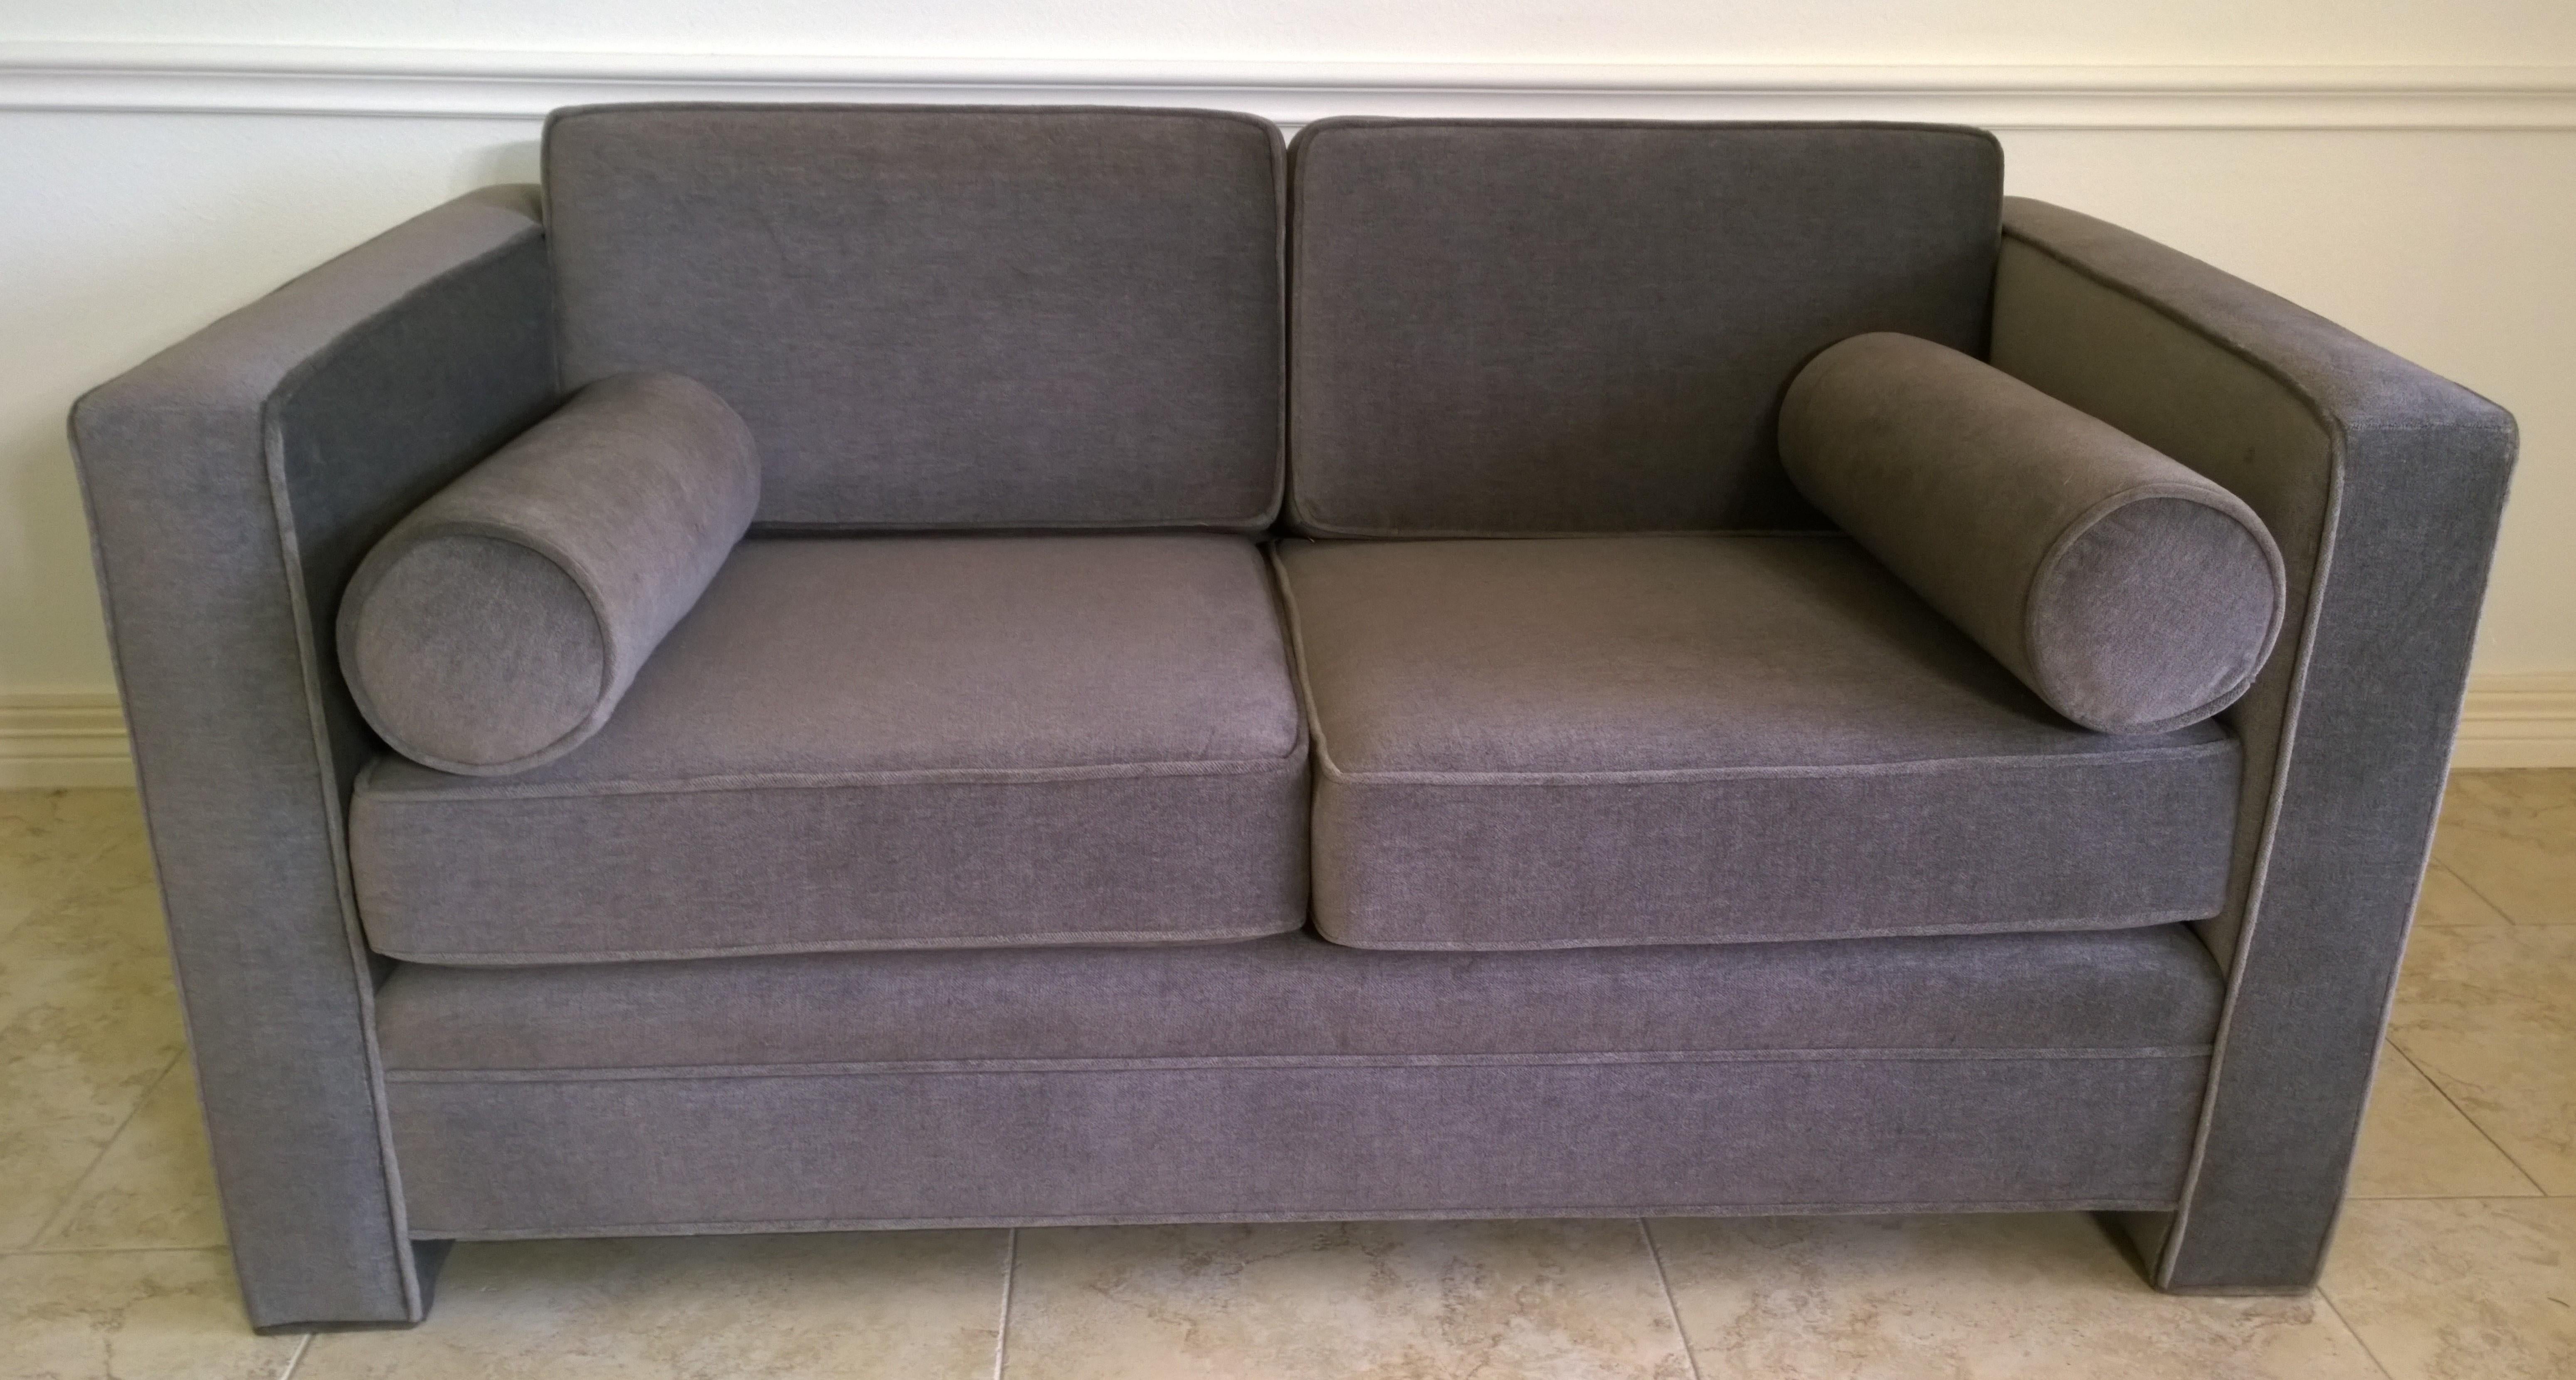 gray modern sofa